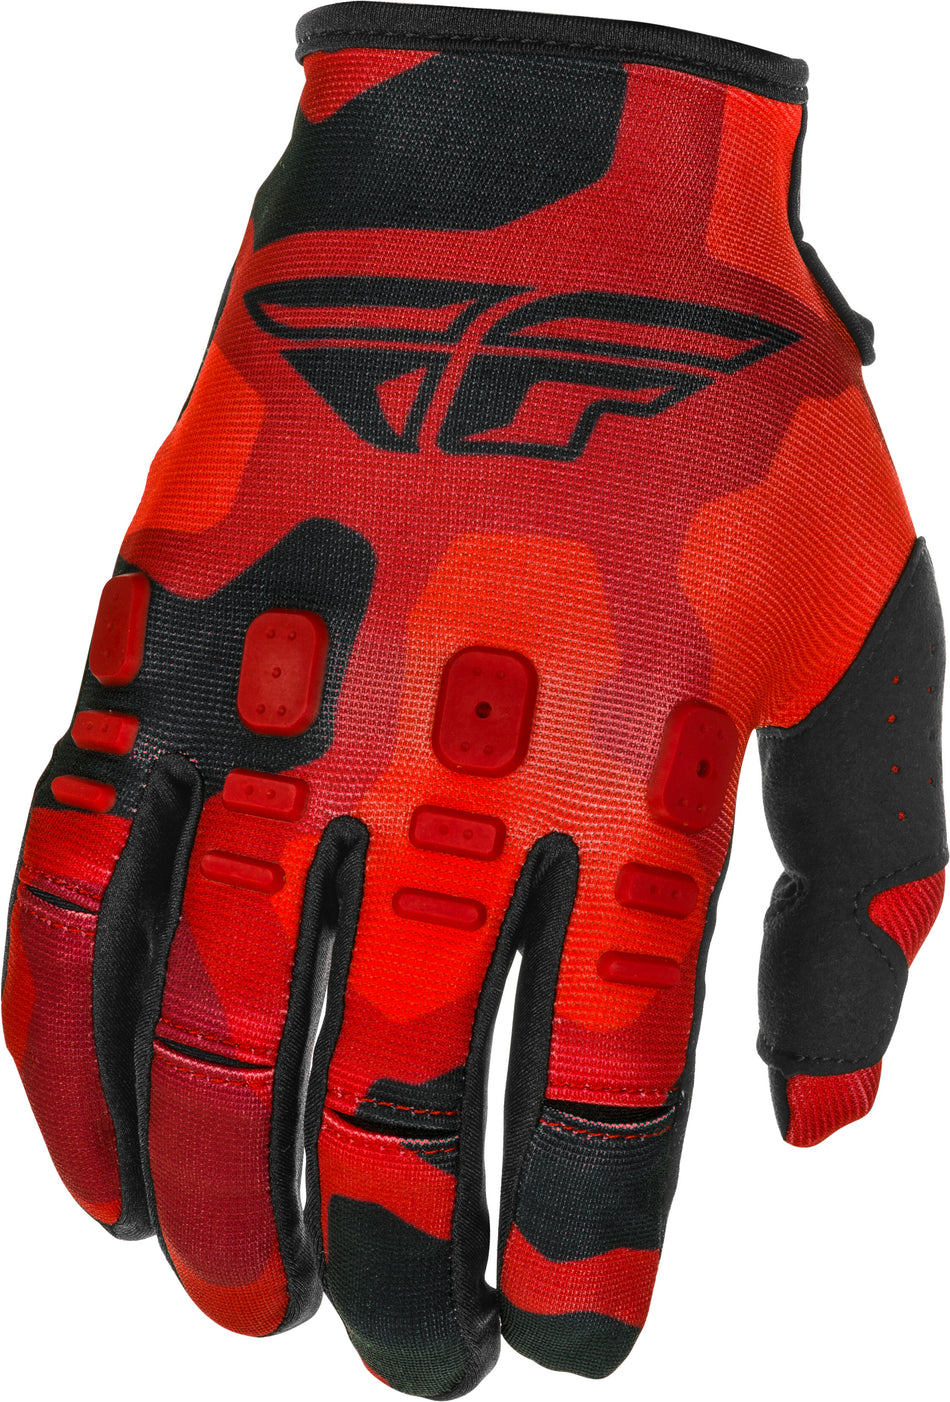 FLY RACING Kinetic K221 Gloves Red/Black Sz 08 374-51208